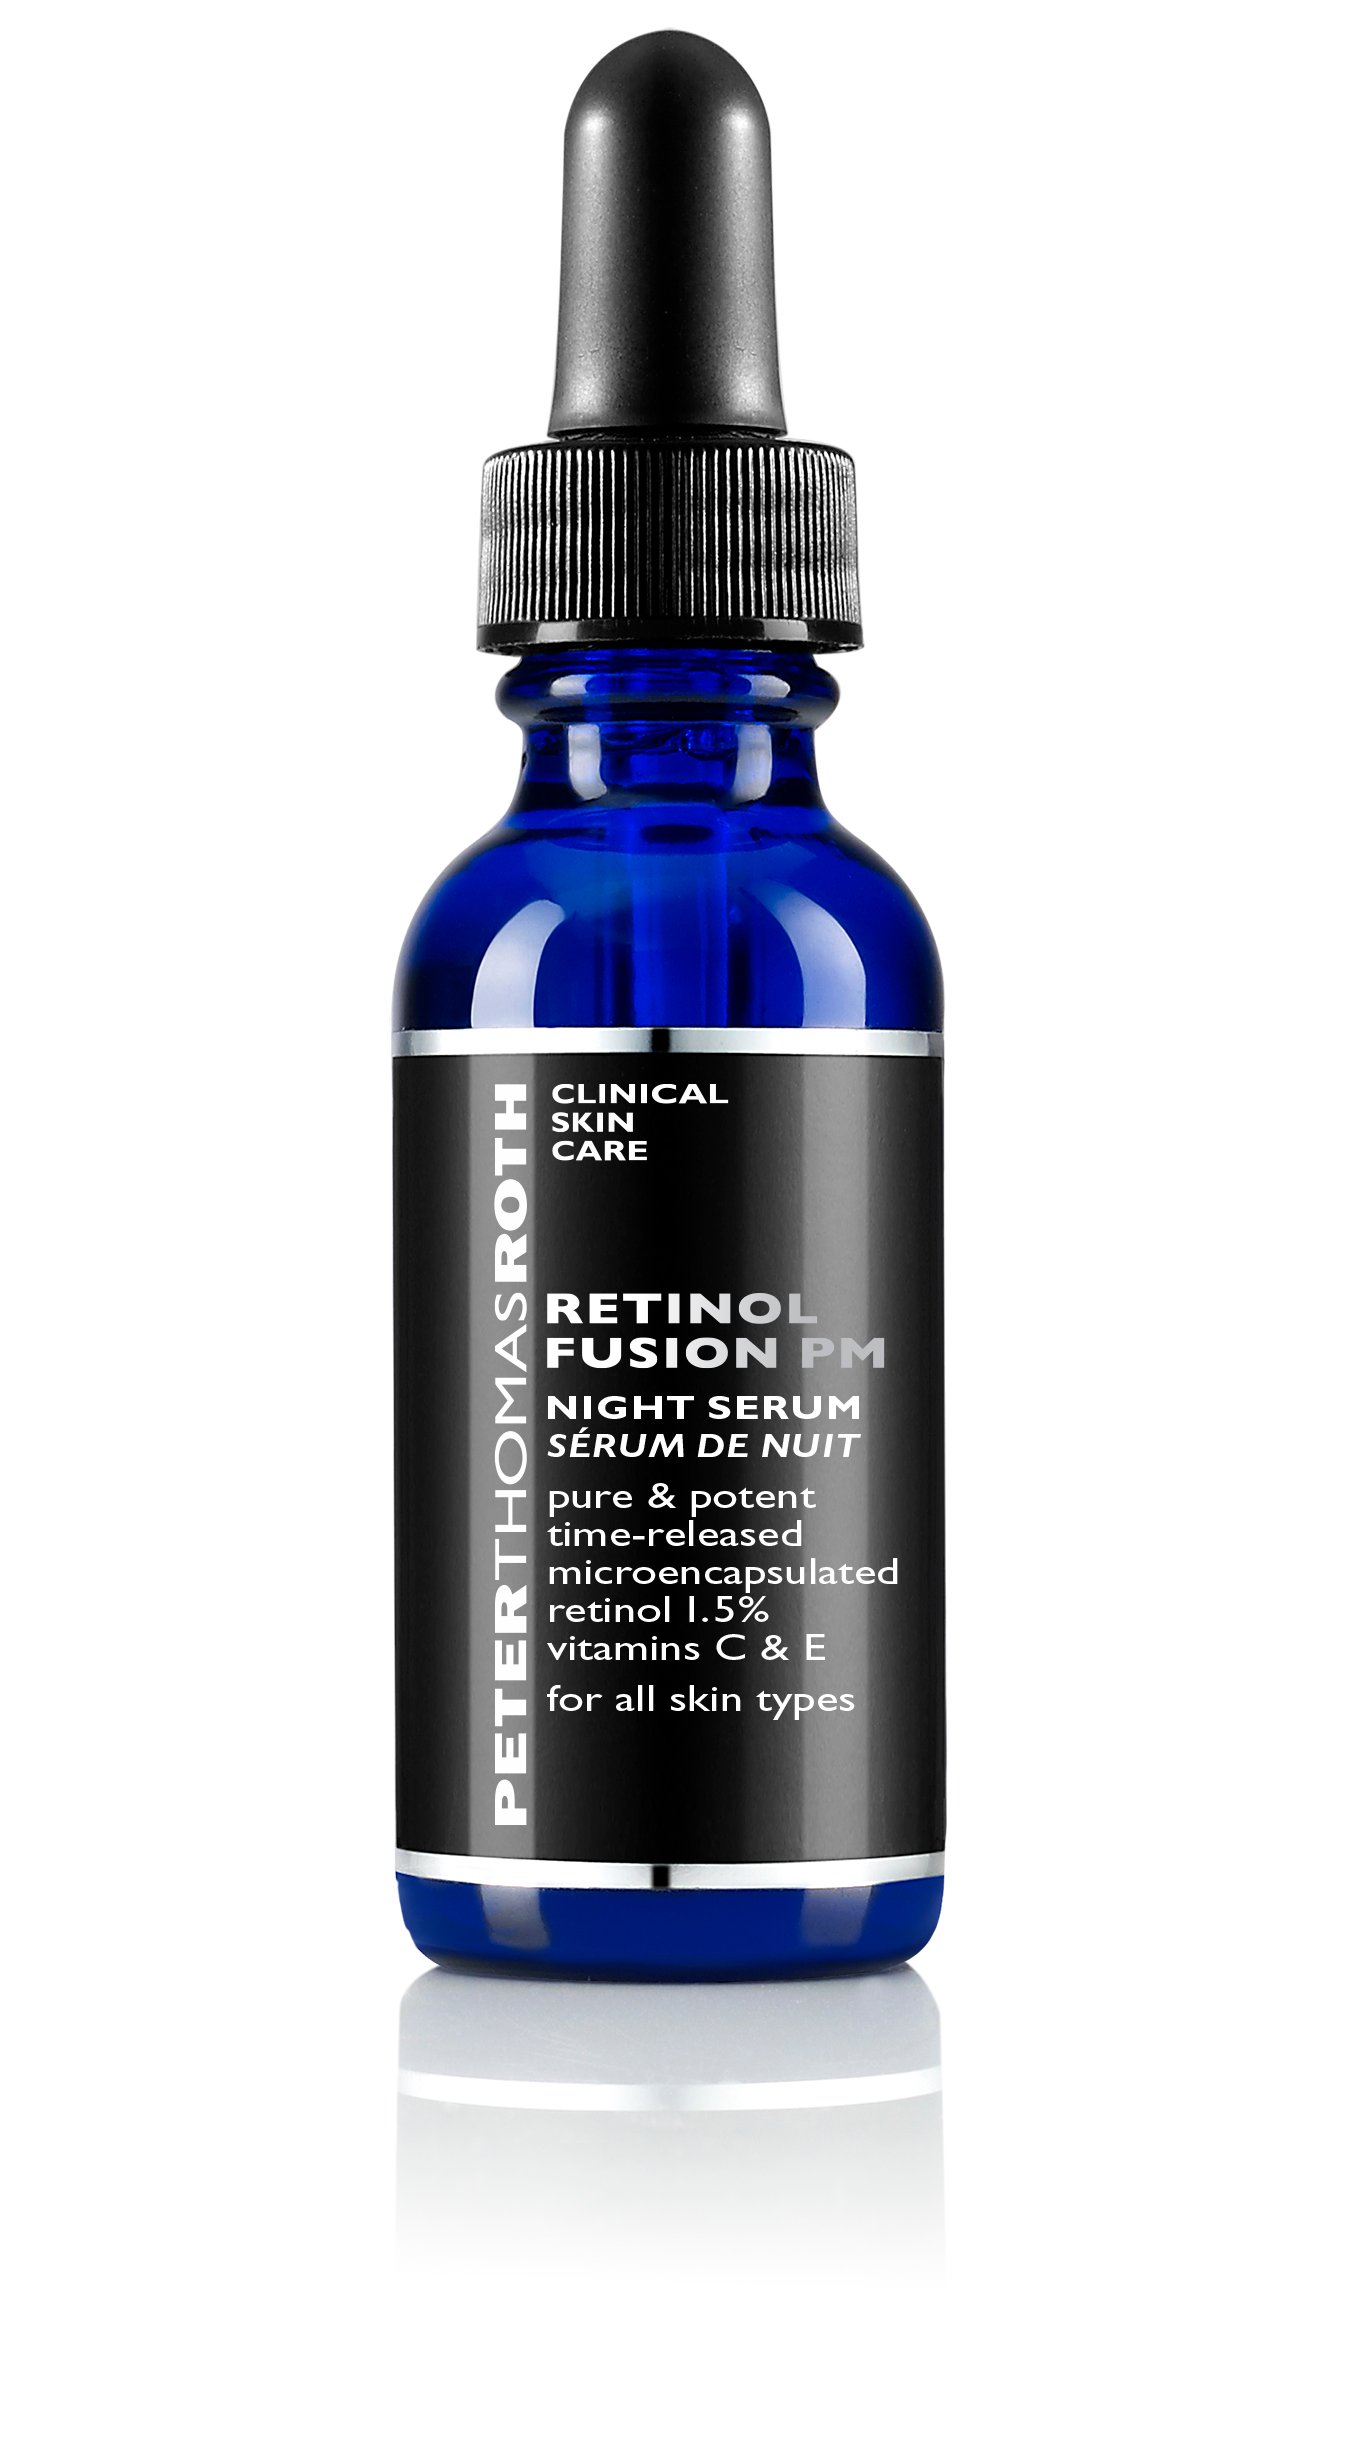 Peter Thomas Roth Retinol Fusion PM Night Serum 30 ml